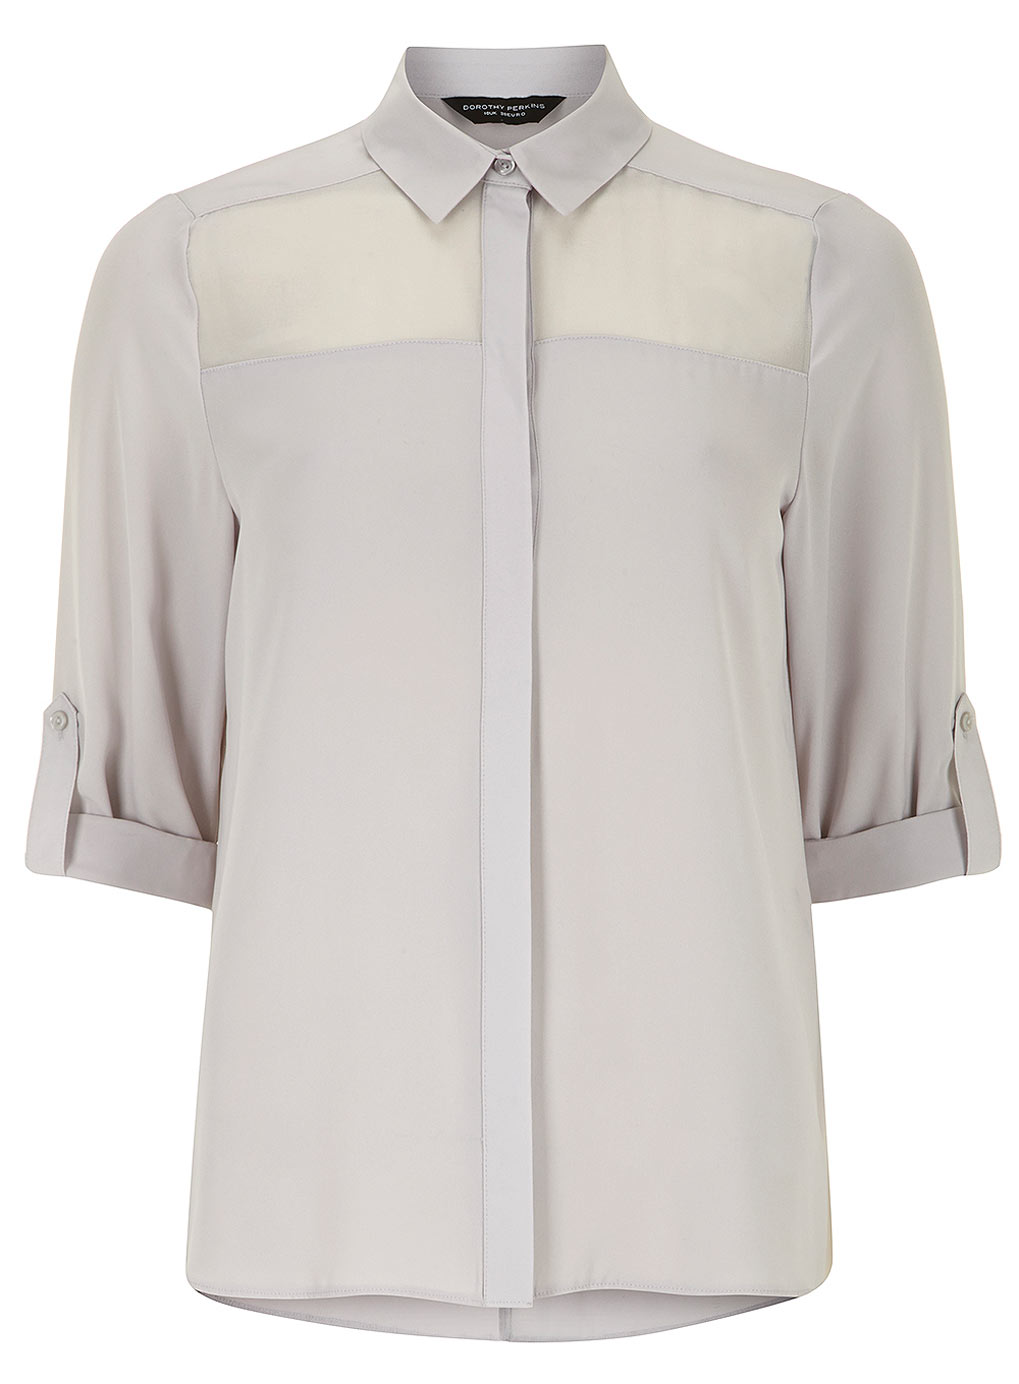 Dorothy Perkins Grey sheer insert blouse 05414762